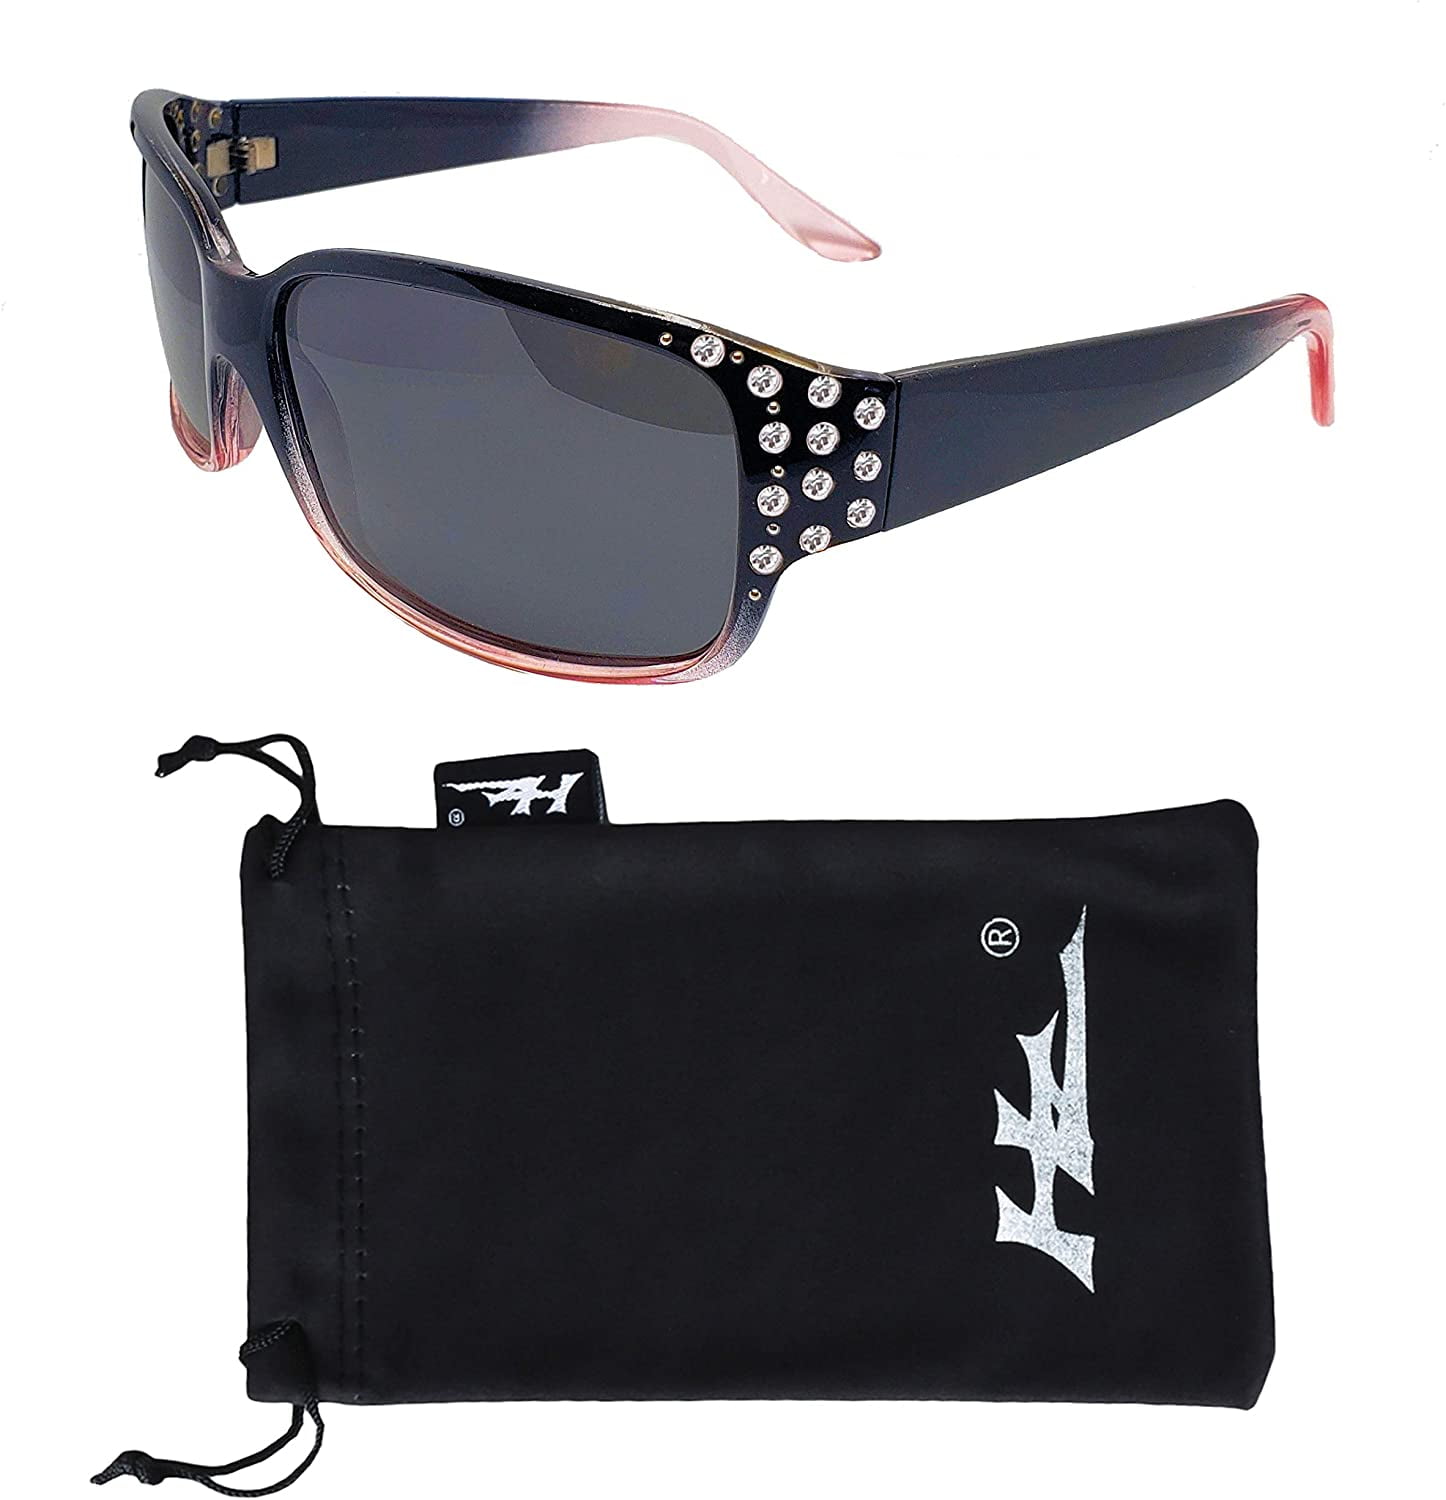 Polarized Sunglasses for Women - Premium Fashion Sunglasses - HZ